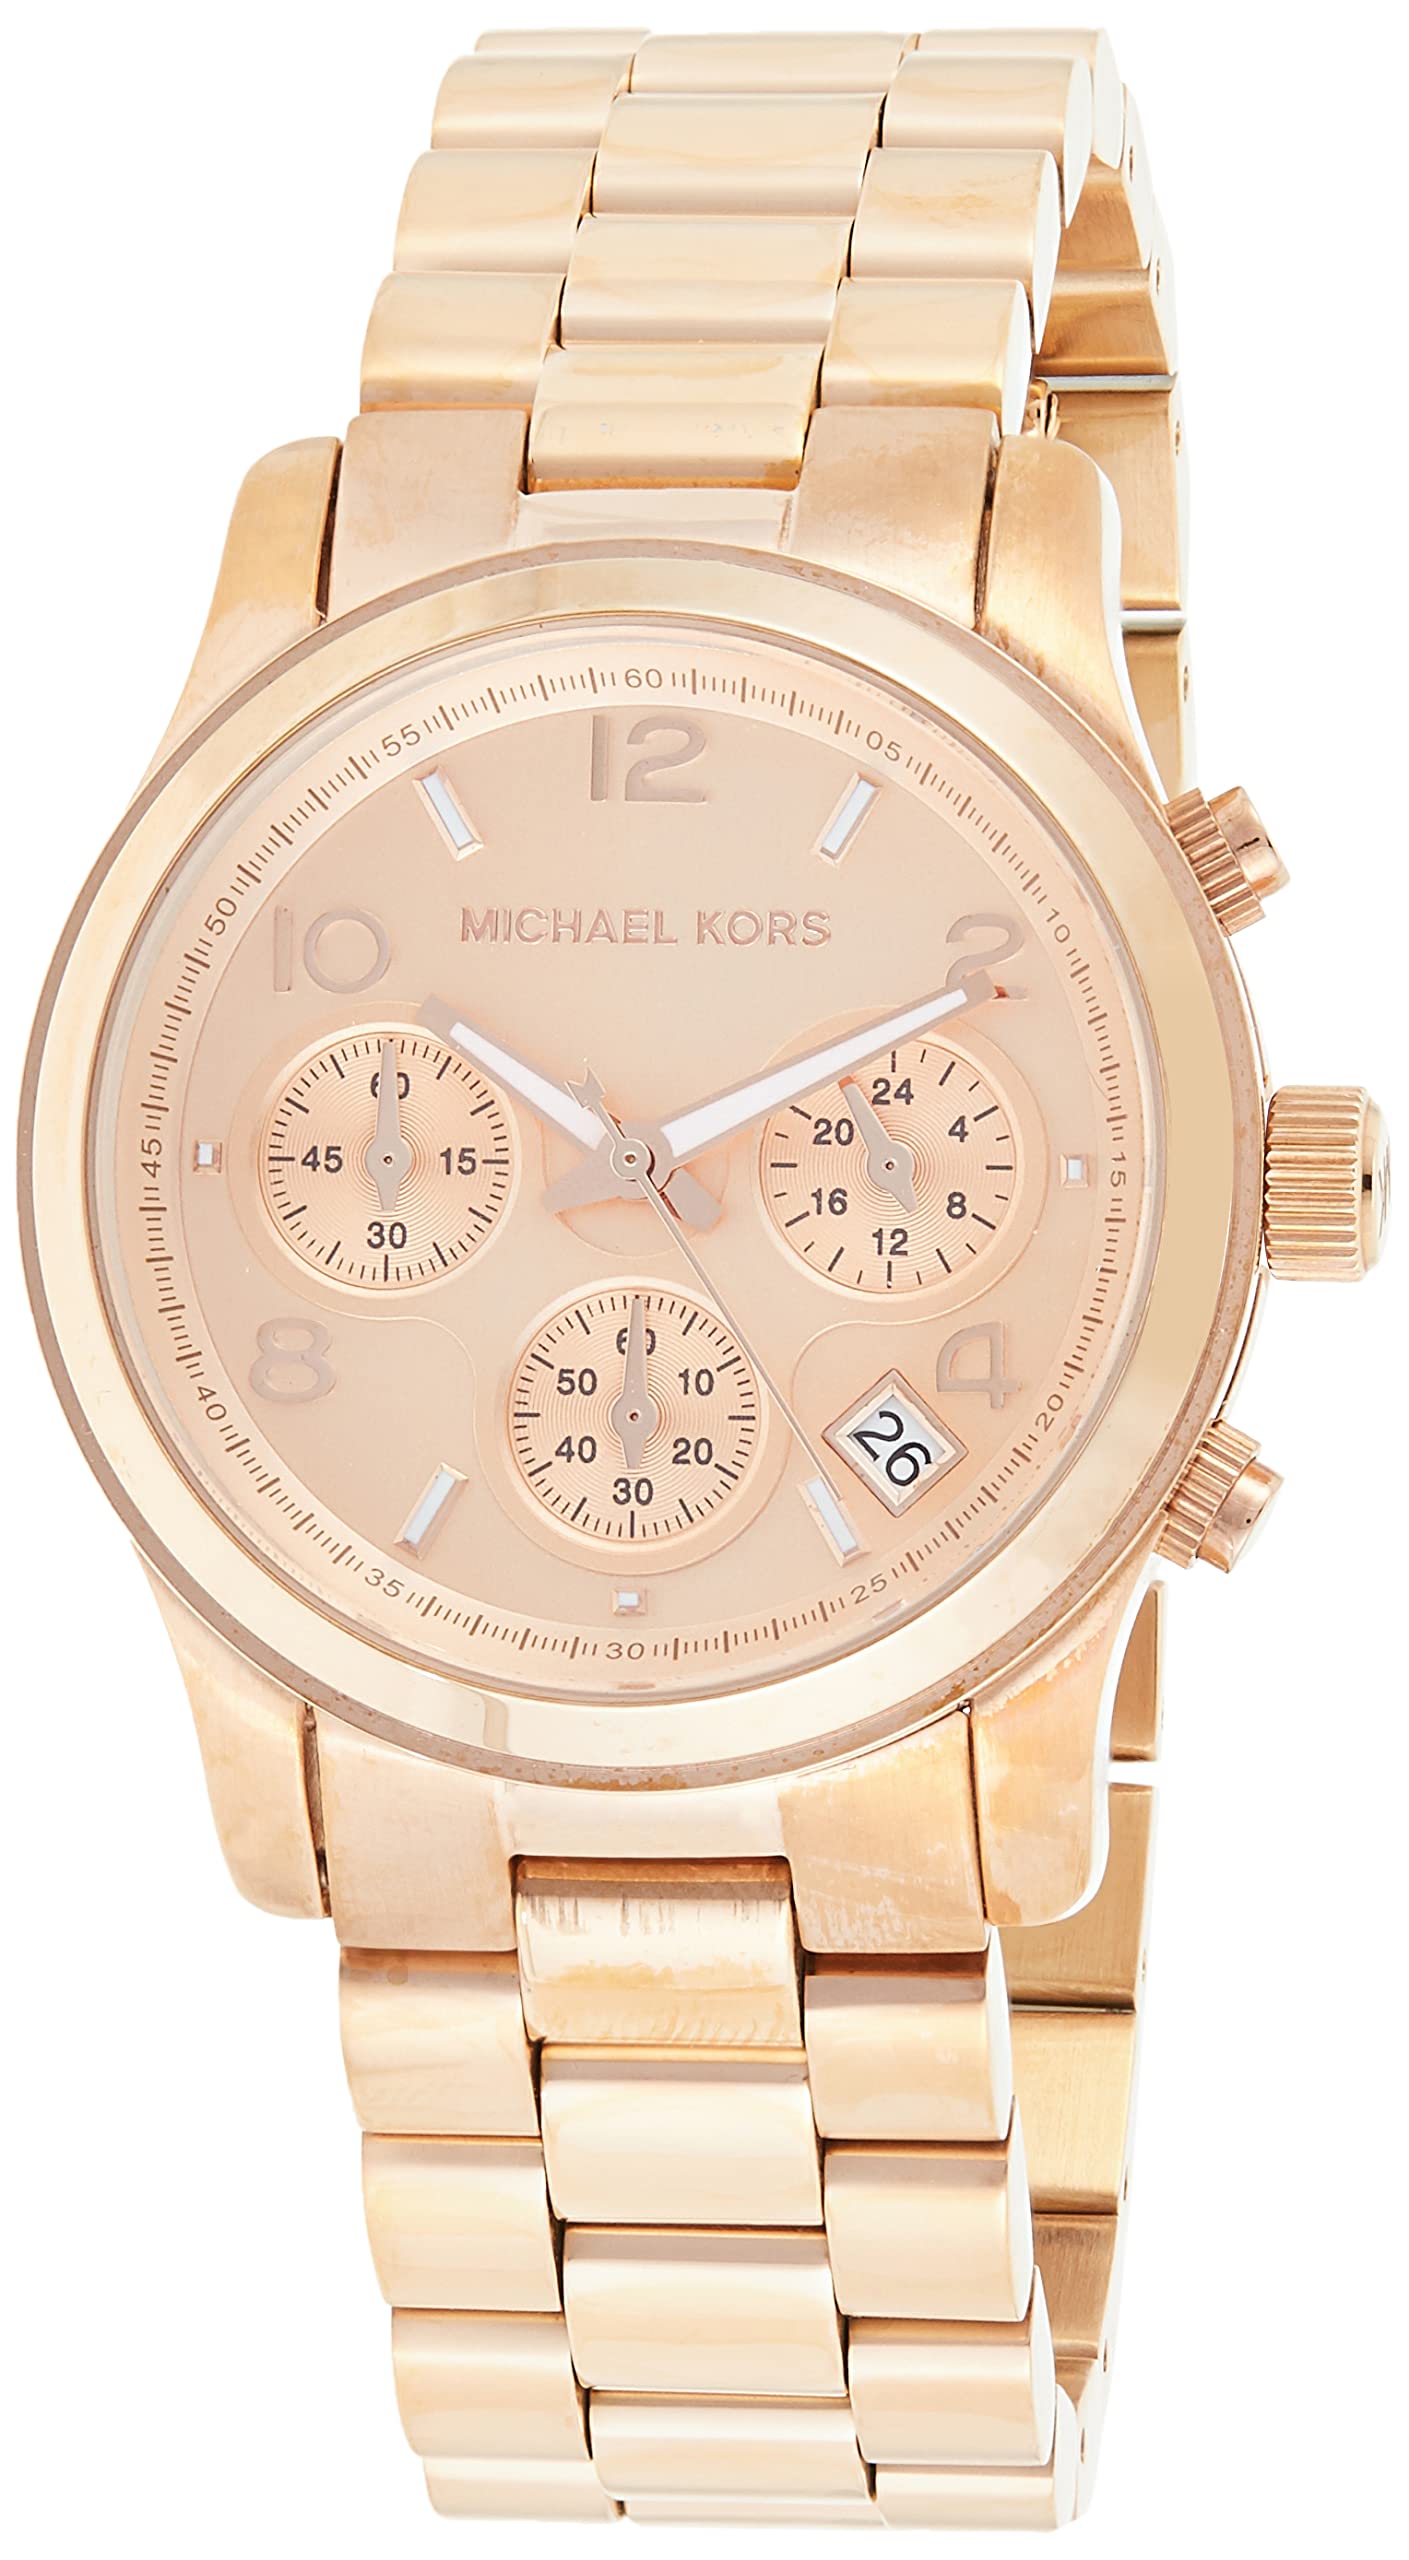 Amazoncom Michael Kors Golden Runway Watch with Glitz MK5166  Michael  Kors Clothing Shoes  Jewelry